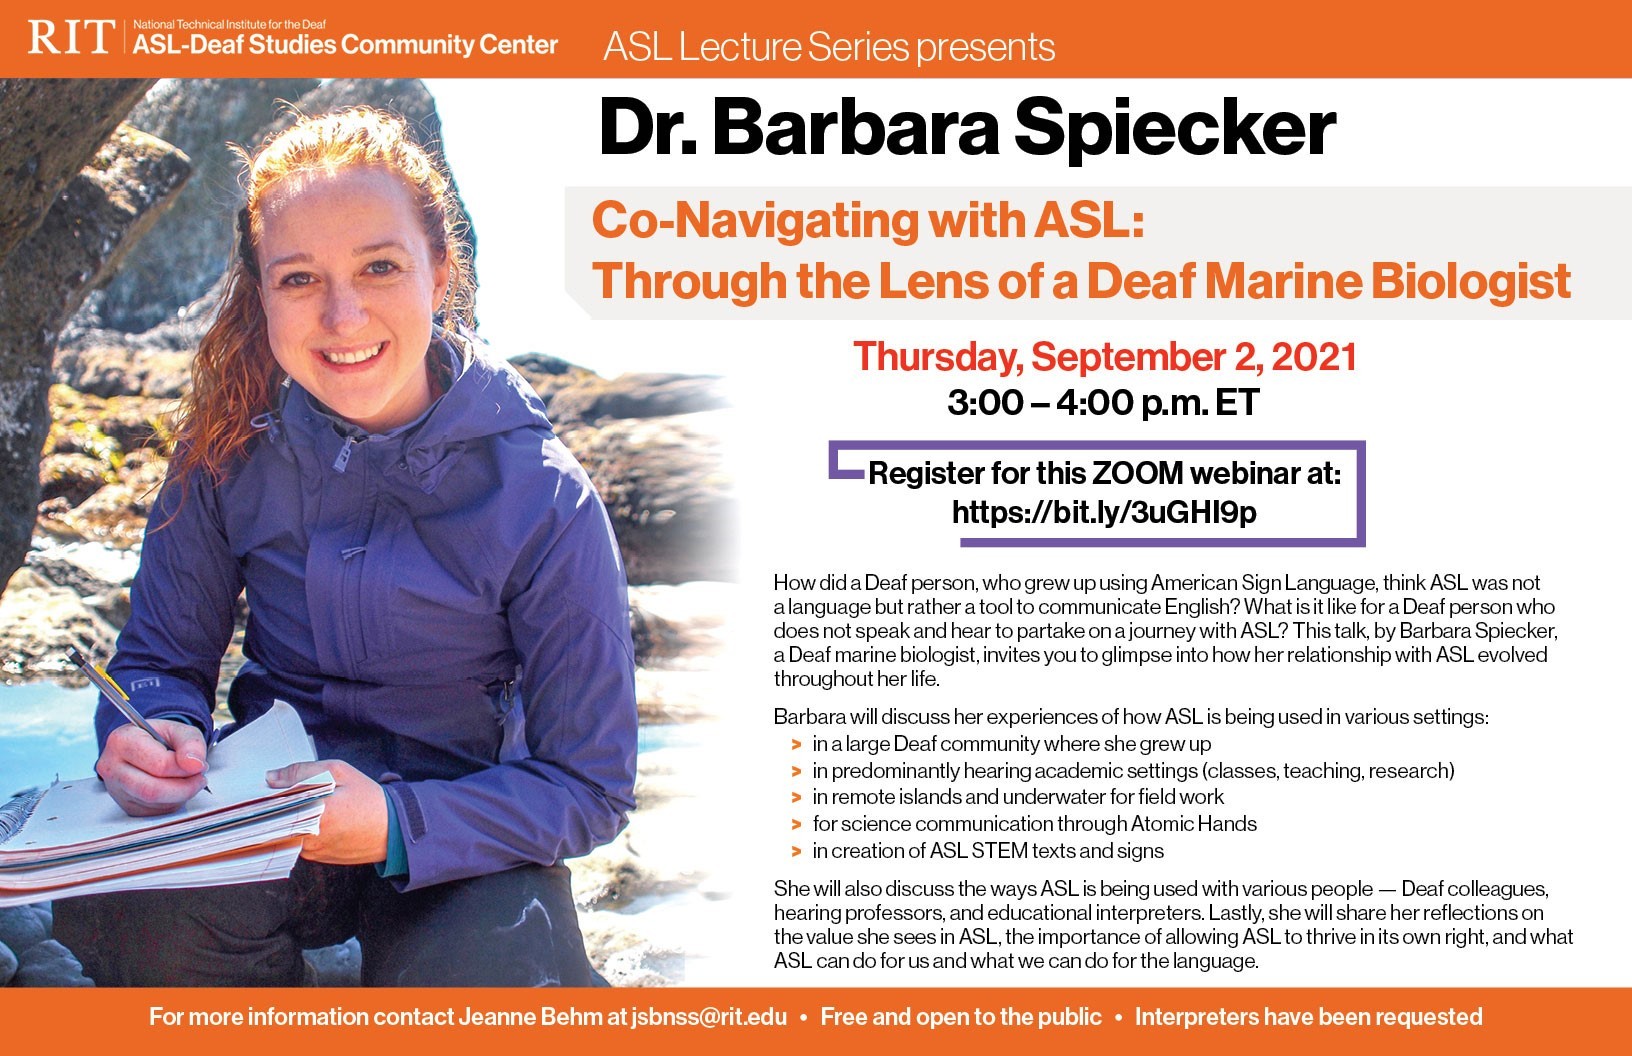 ASL Lecture Series Presents Dr. Barbara Spiecker 